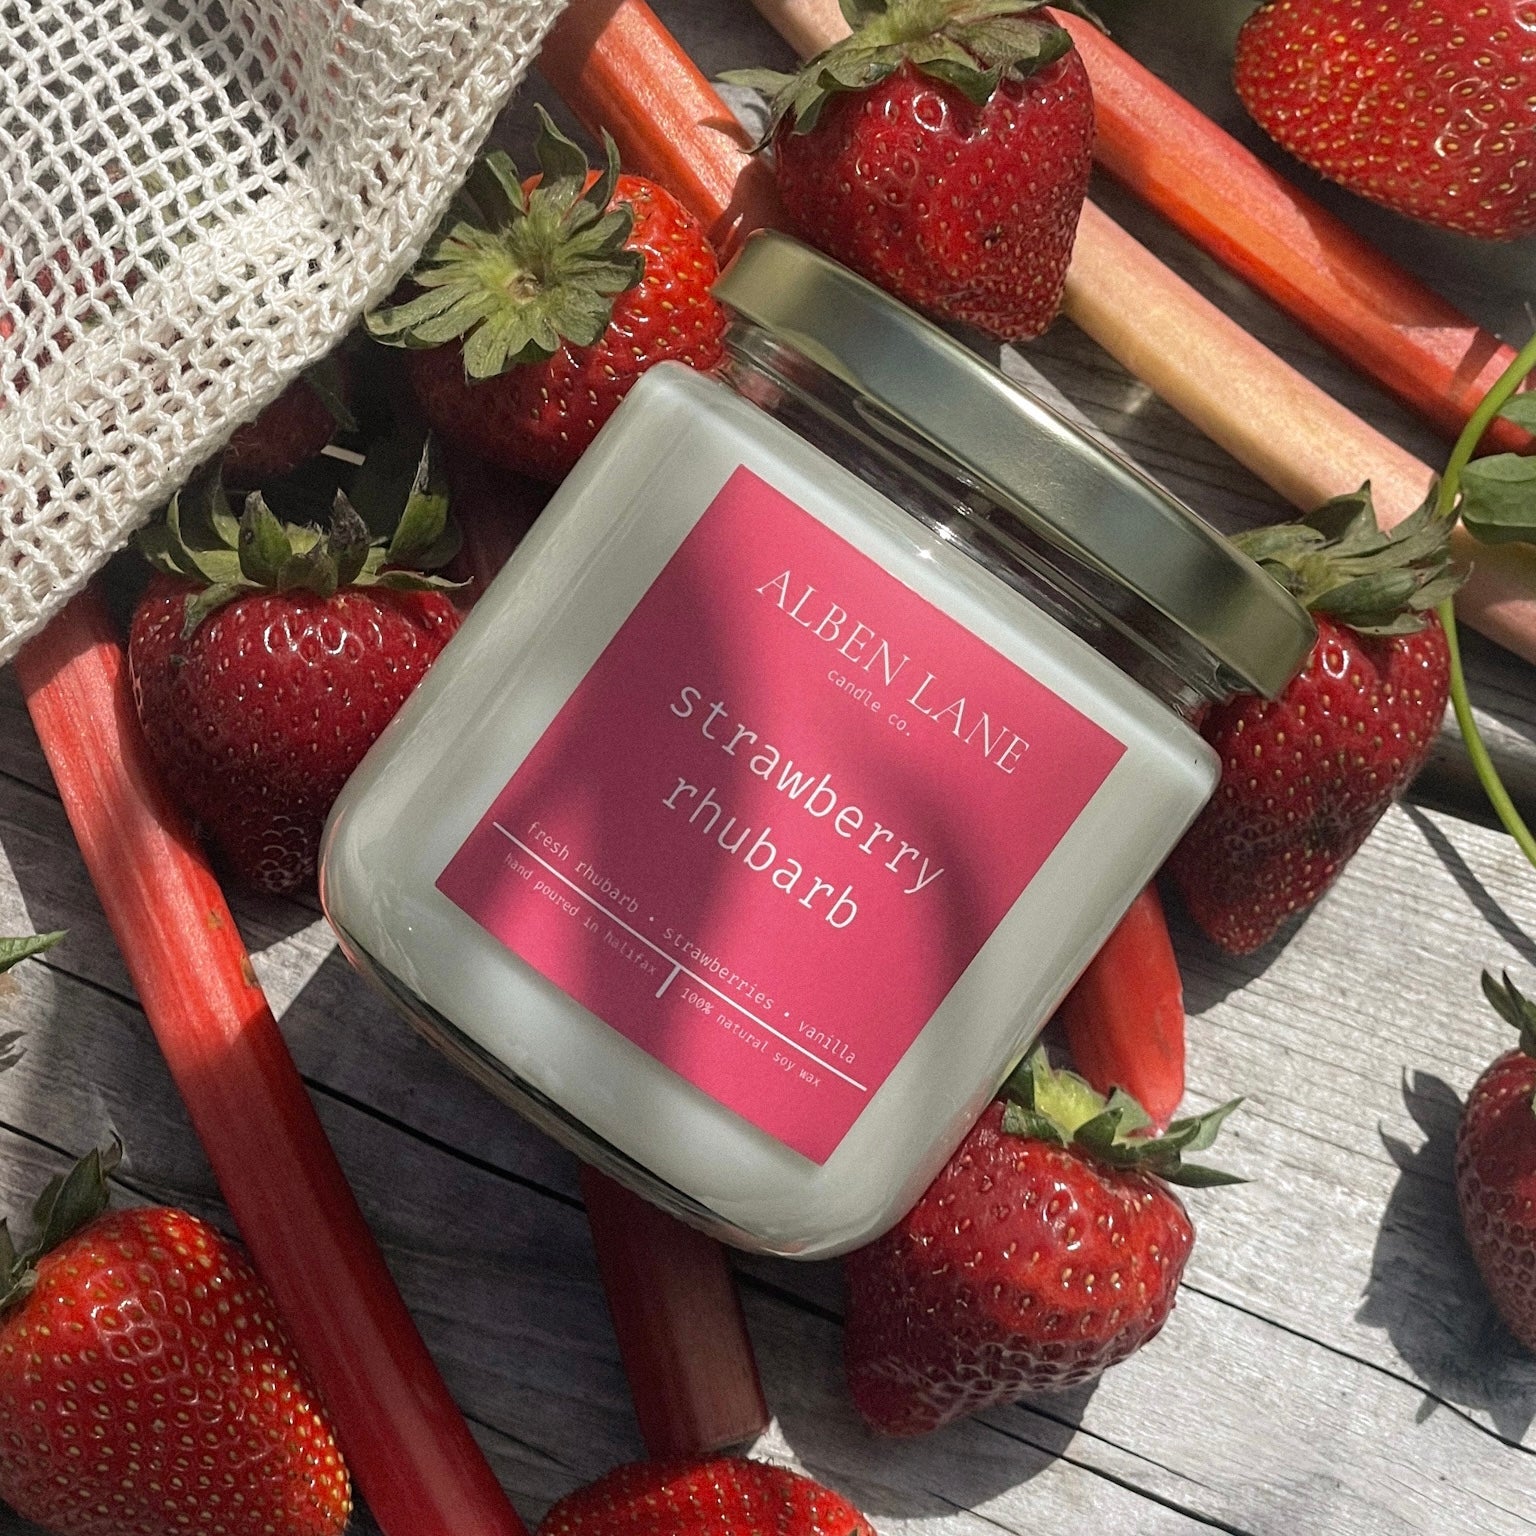 Alben Lane Candle Co. Jar Candle - Strawberry Rhubarb